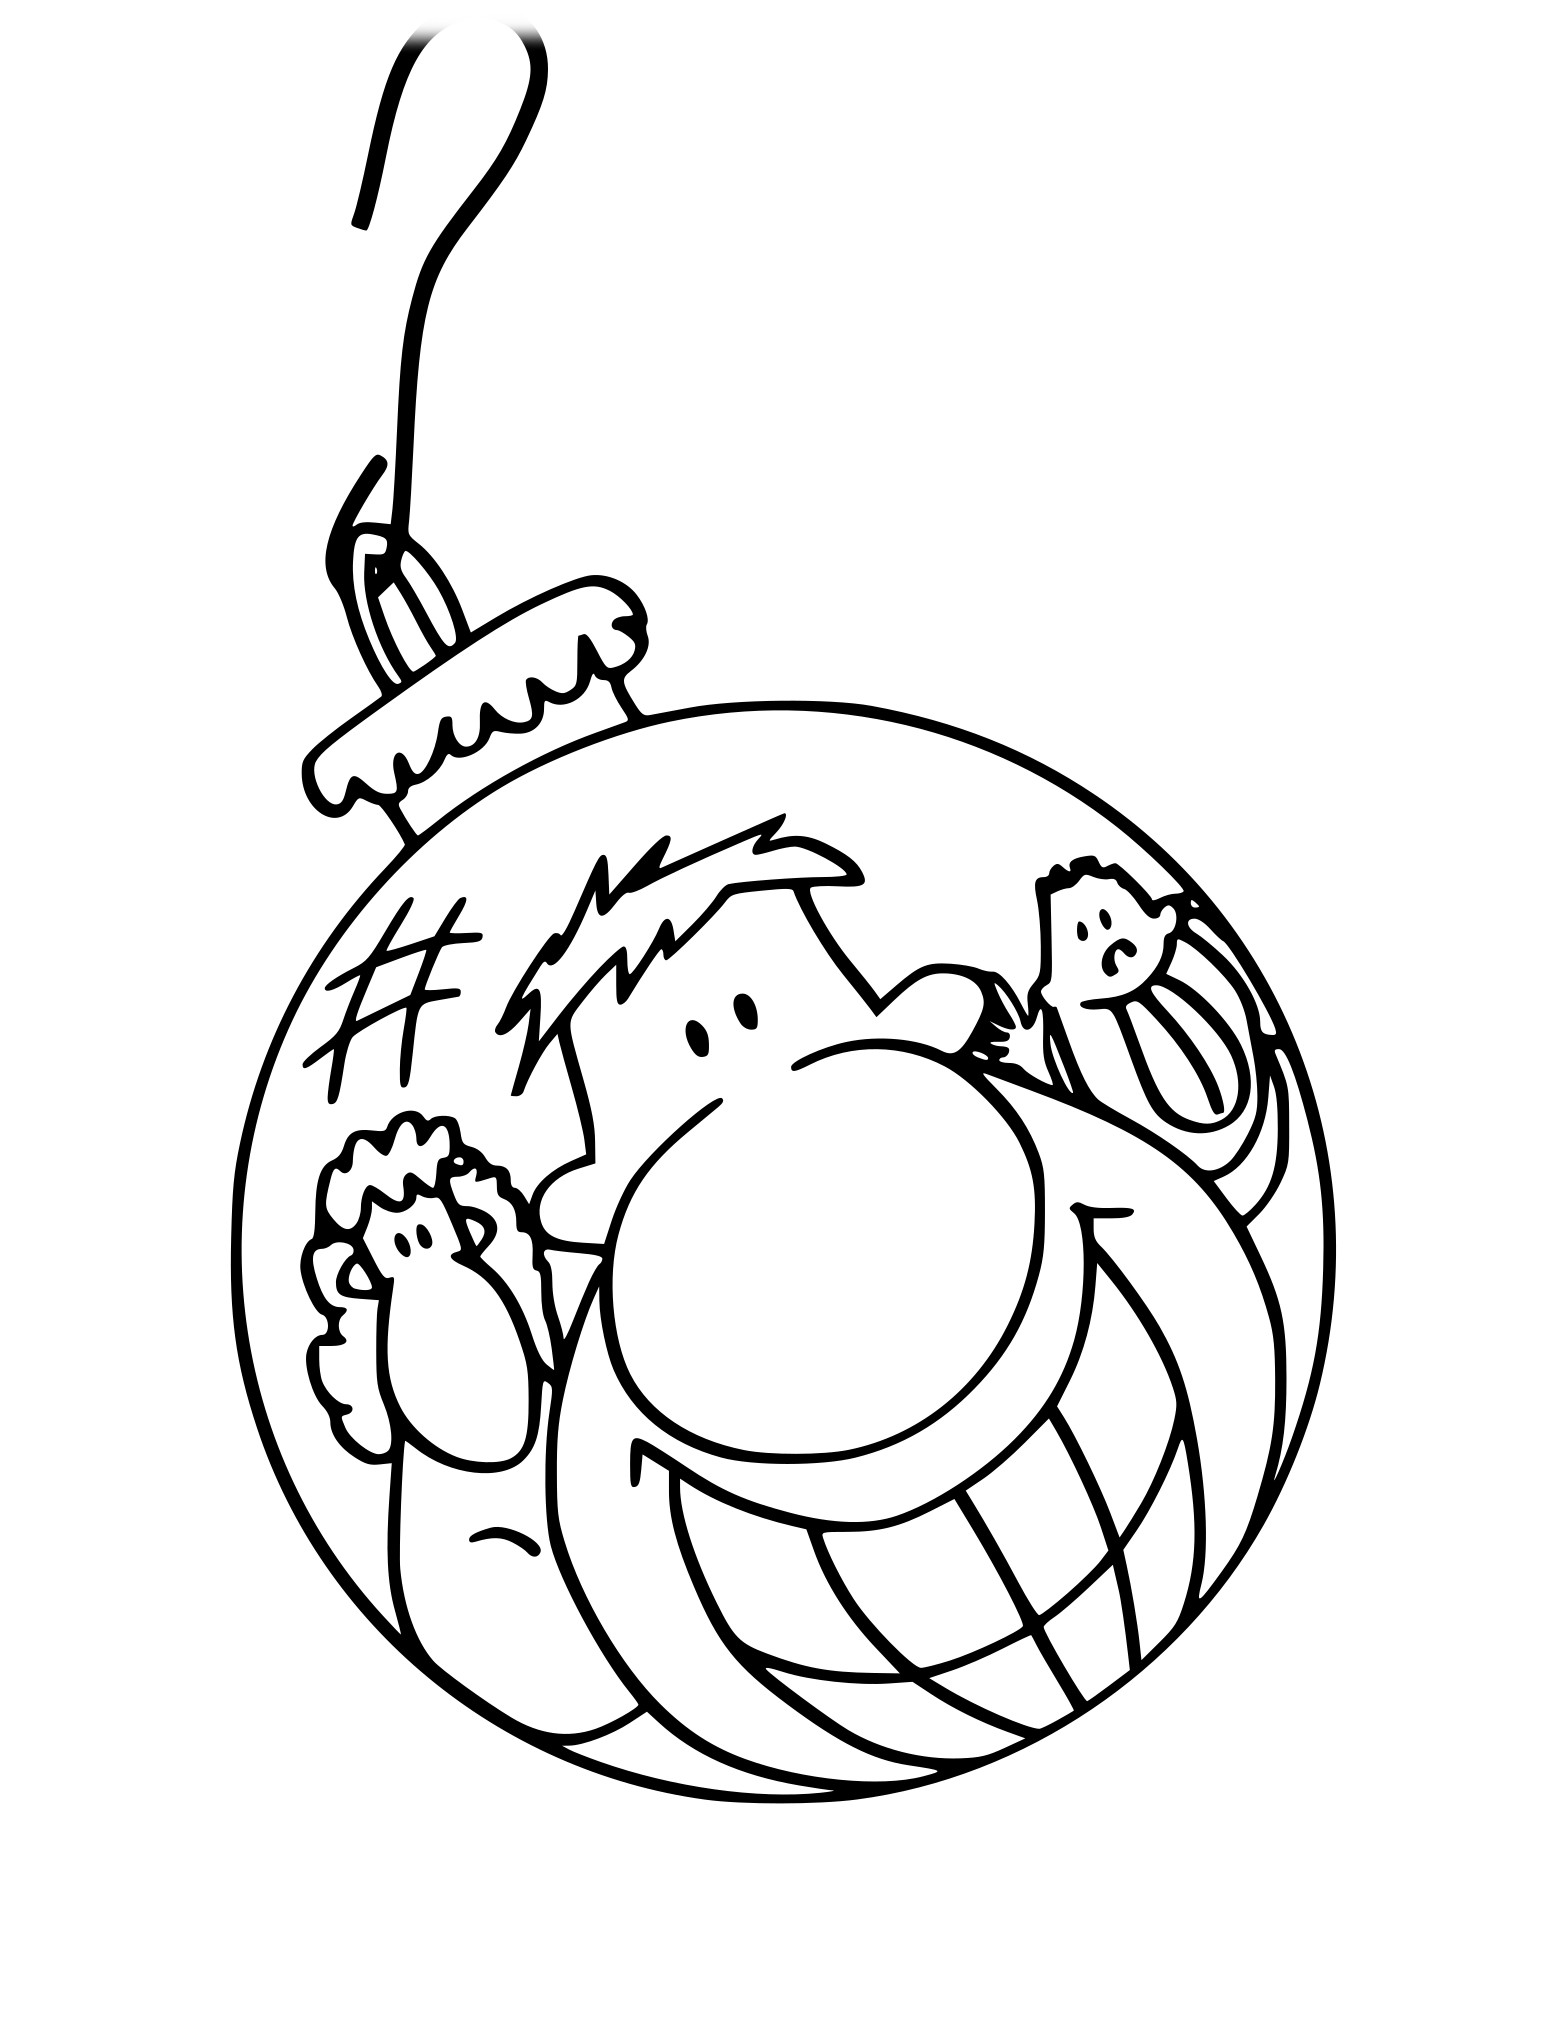 Christmas Ball drawing and coloring page